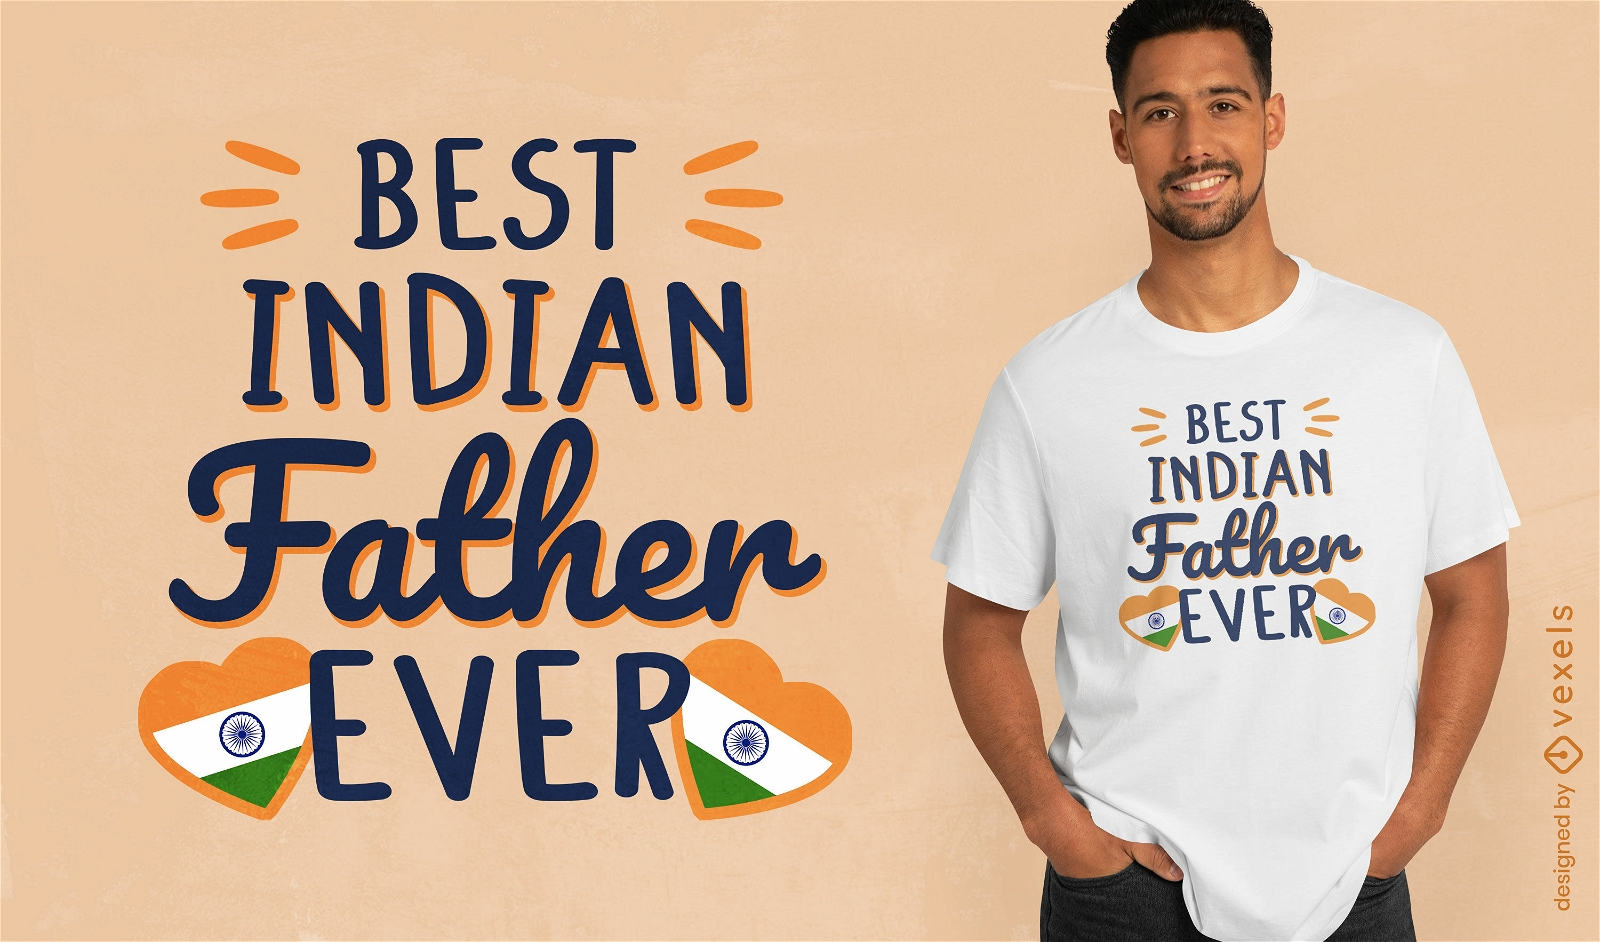 Dise?o de camiseta de padre indio.